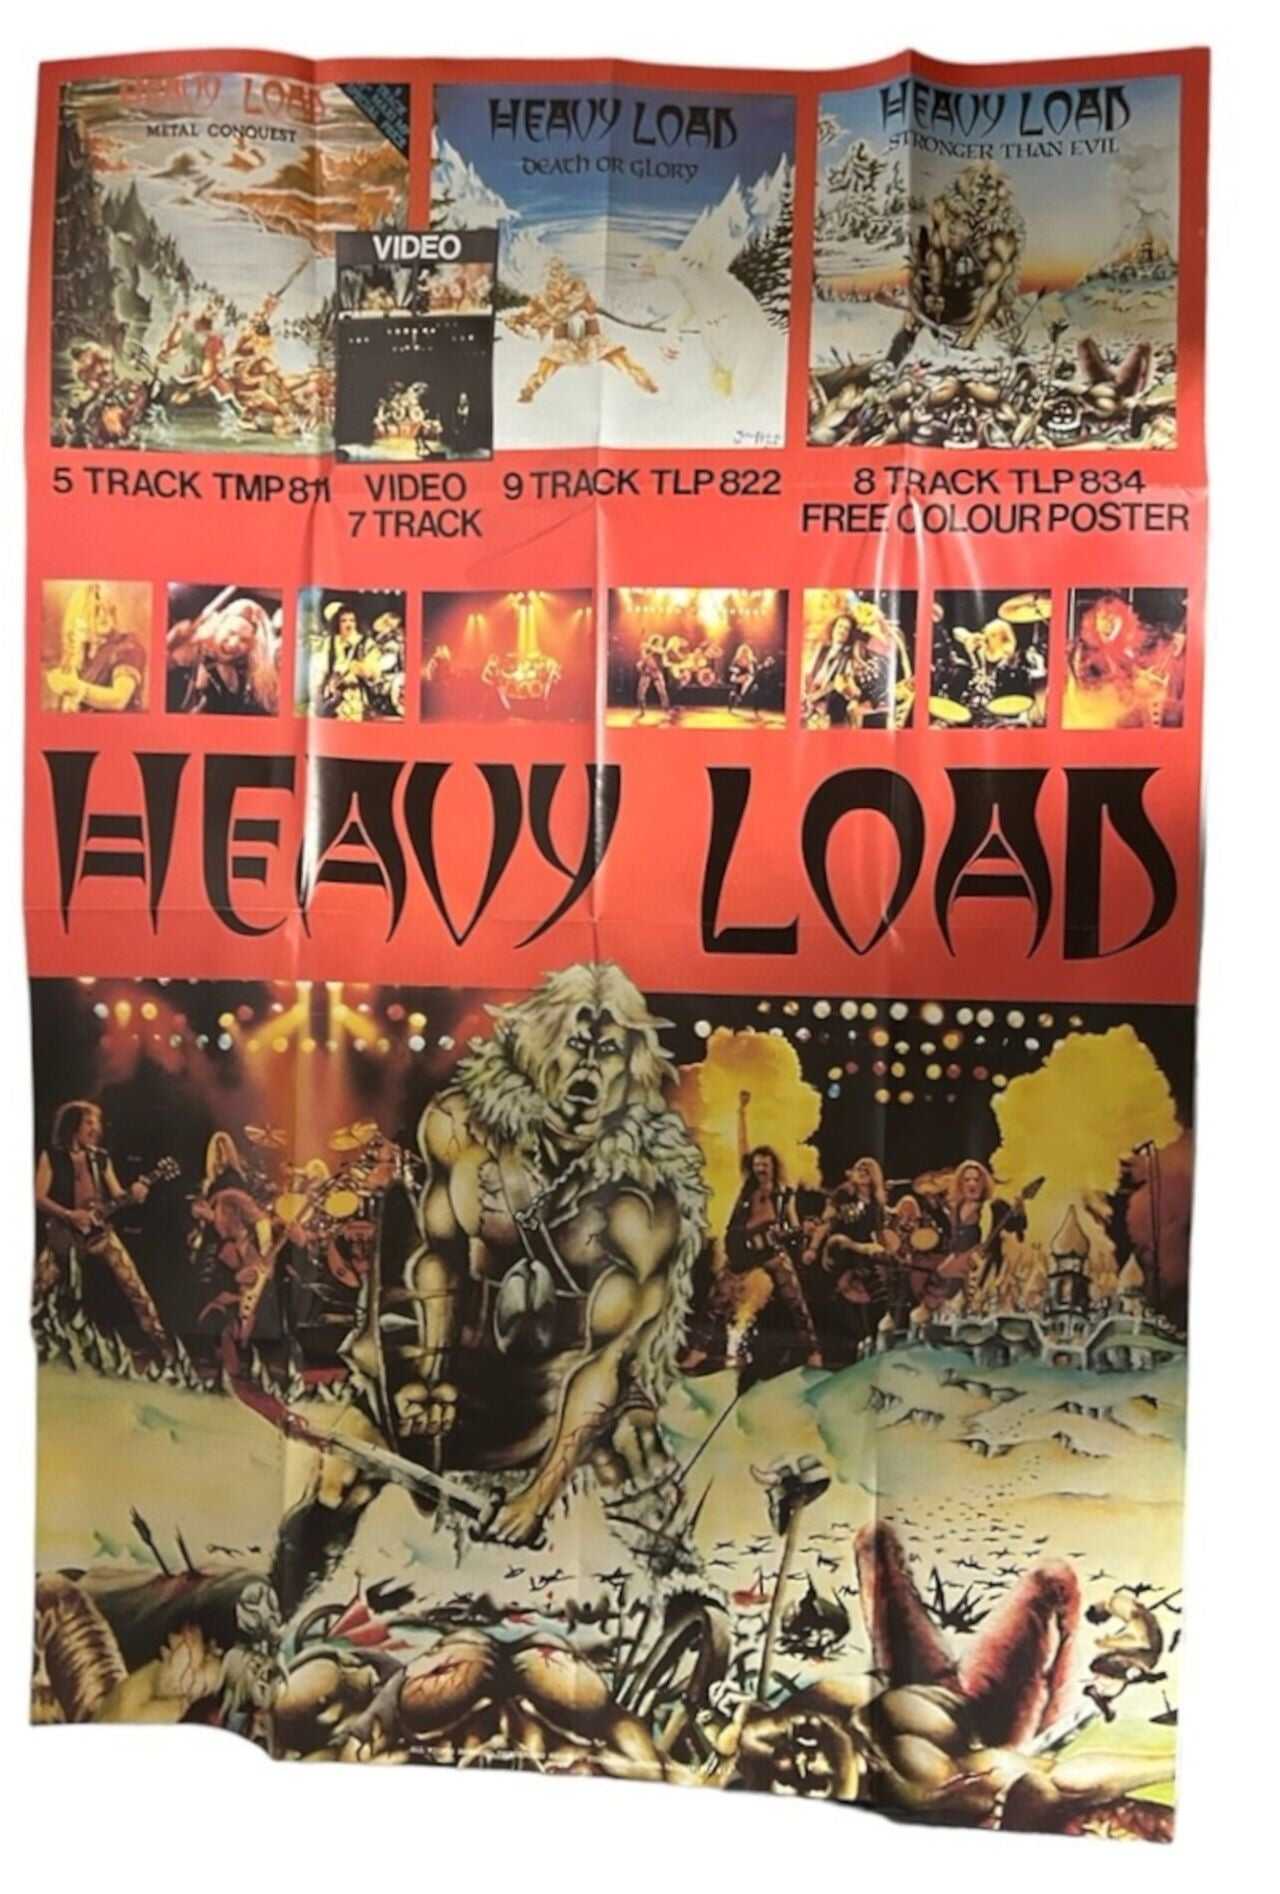 Heavy Load Stronger Than Evil + Poster Swedish Vinyl LP